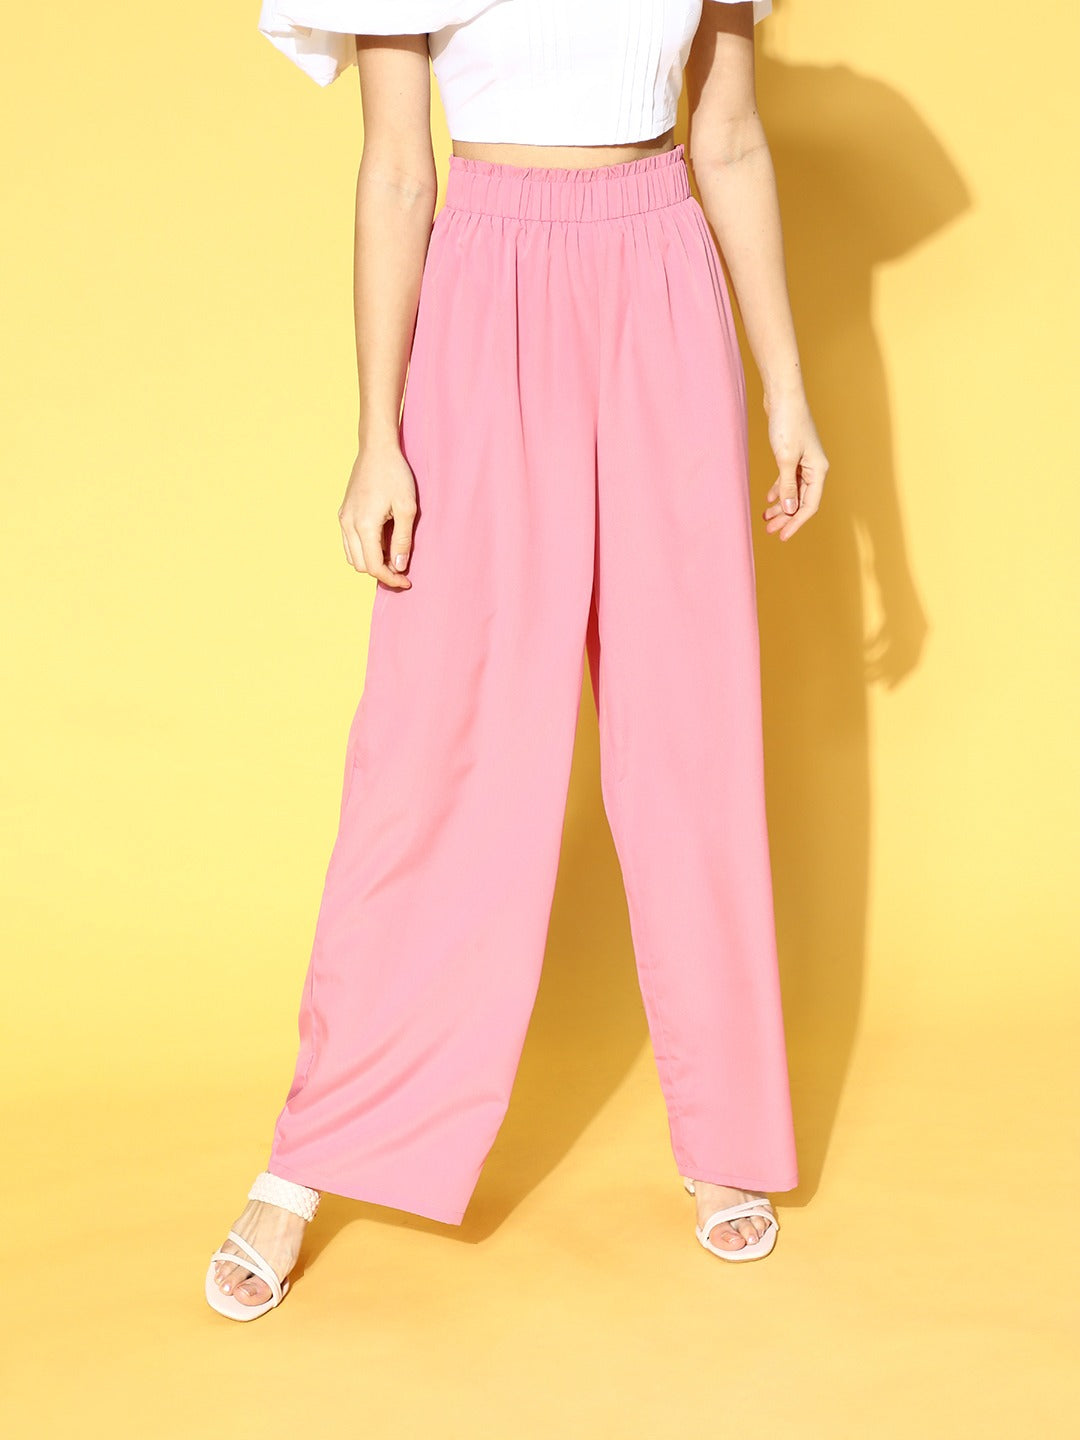 Buy YOZLY Women's Rayon Solid Baby Pink Palazzo Pants Free Size at